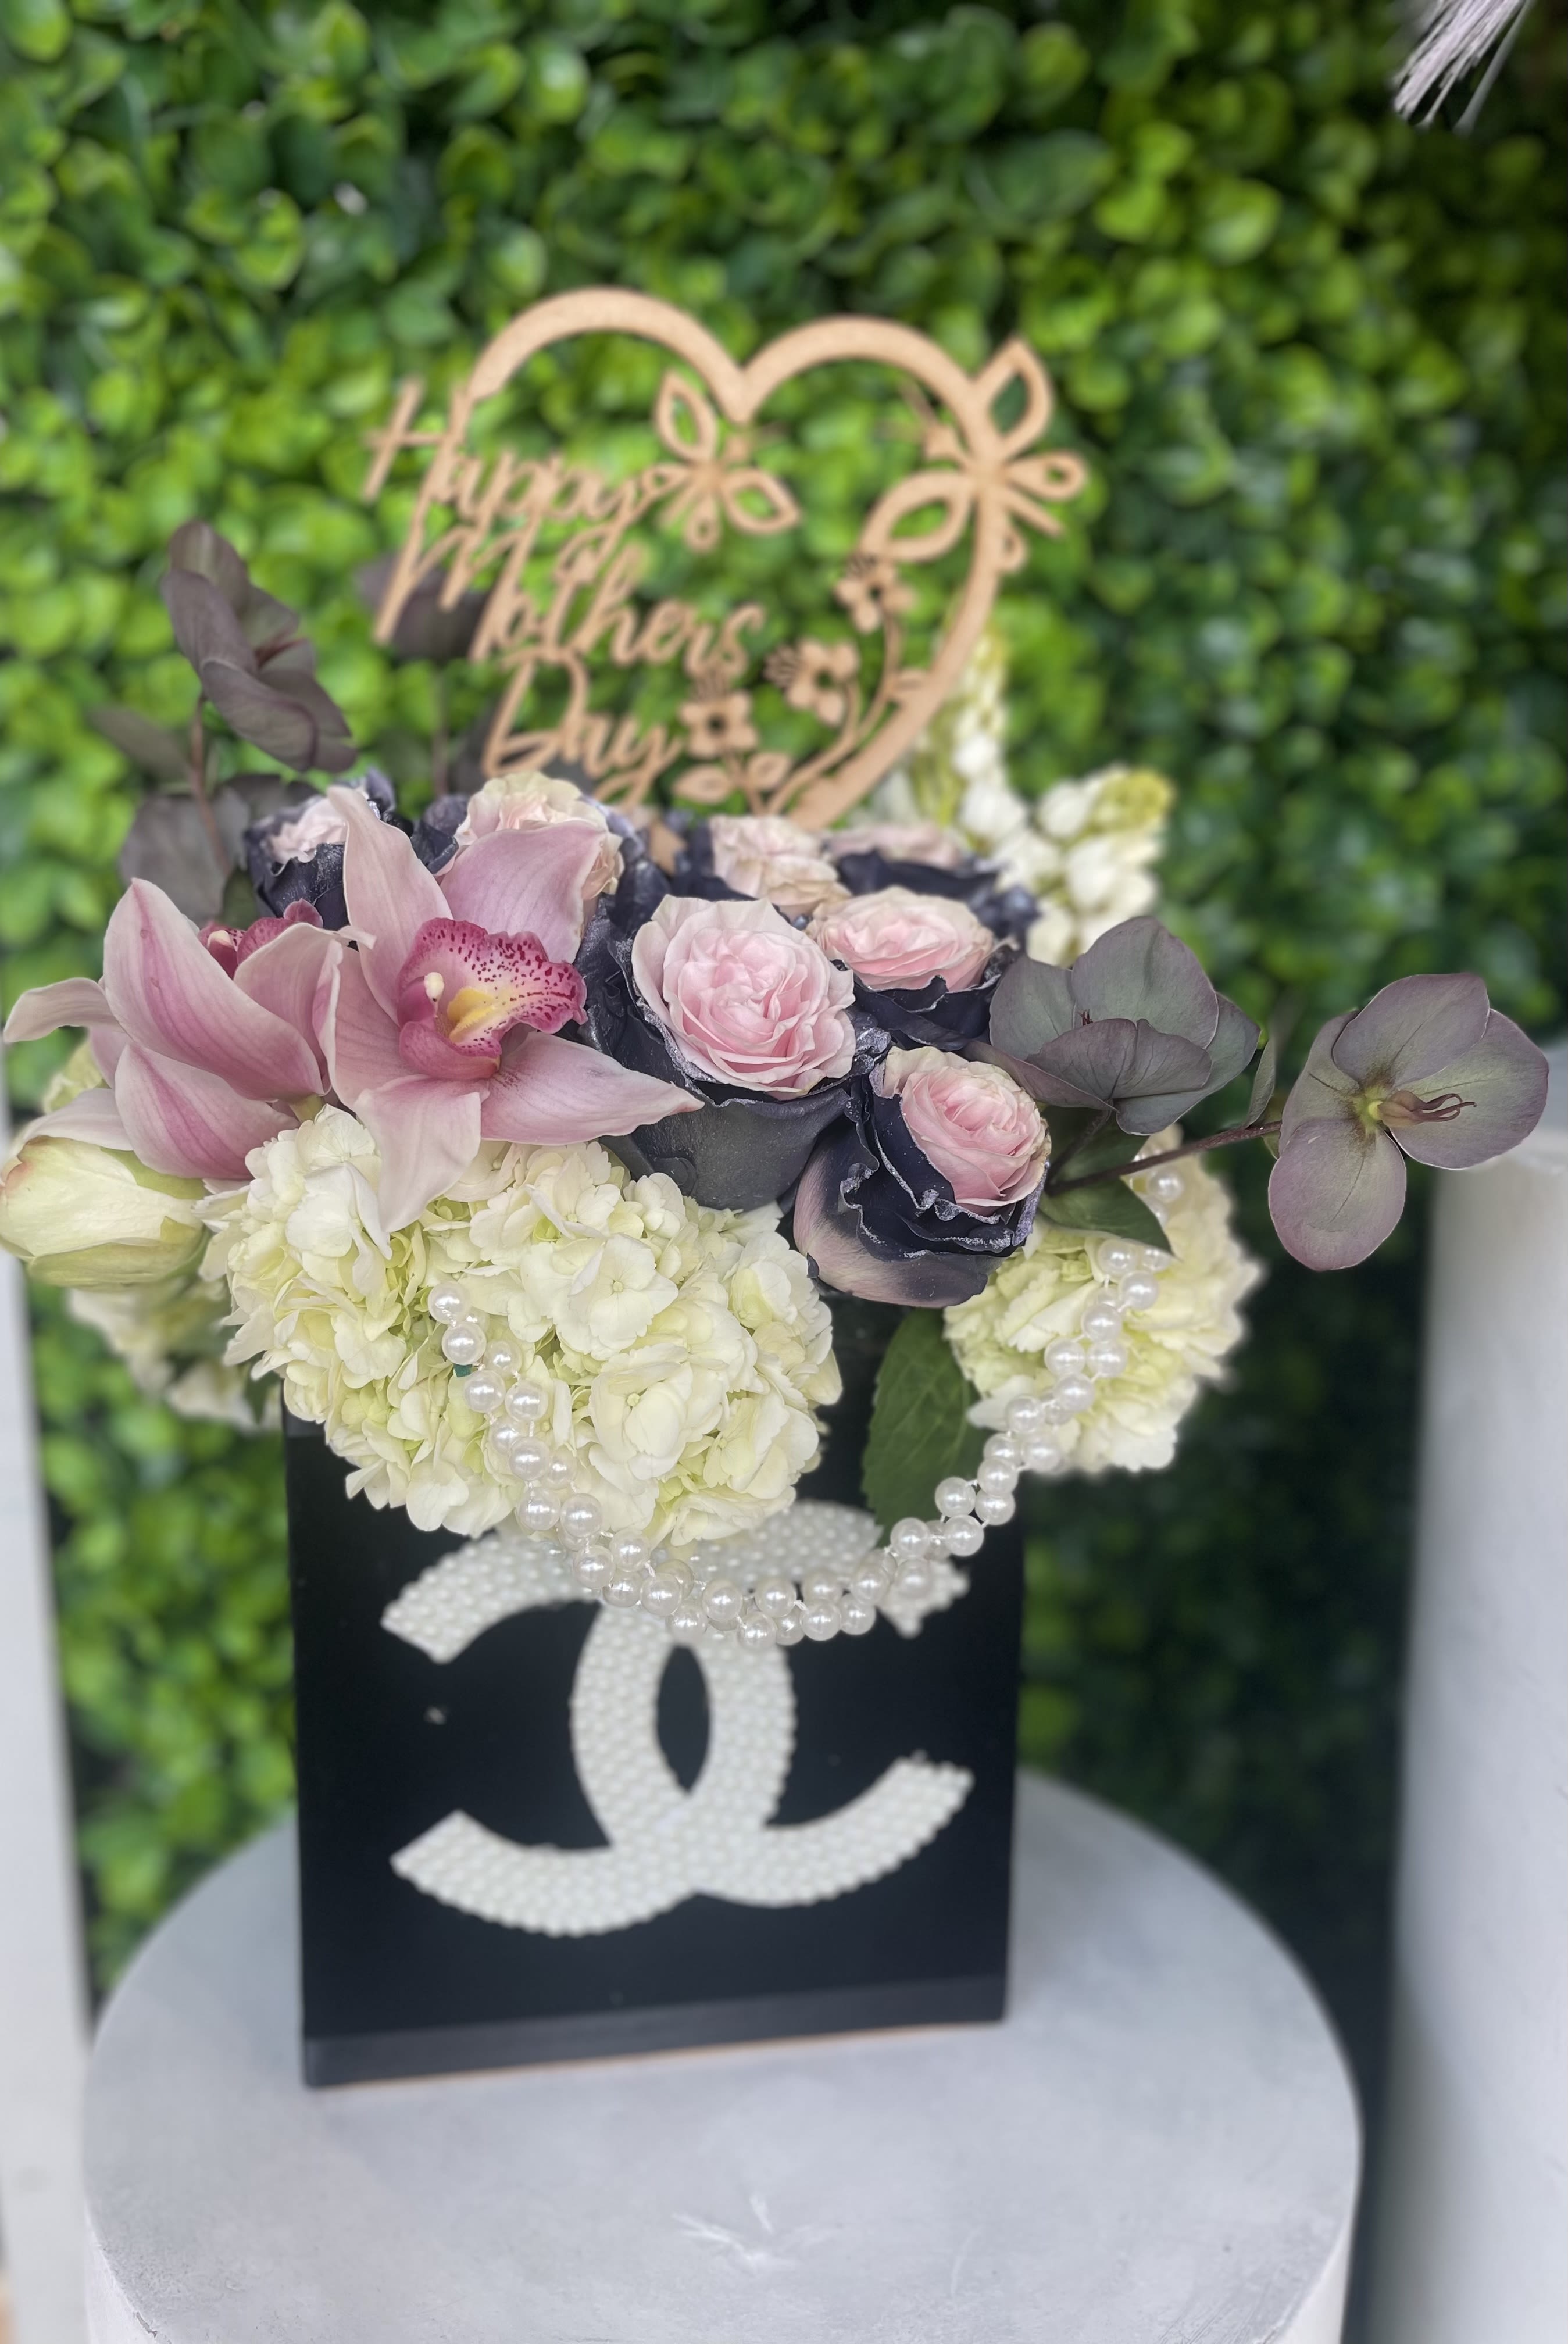 Chanelity Design  - One-of-a-kind Rose Floral Arrangement Designed in a box 